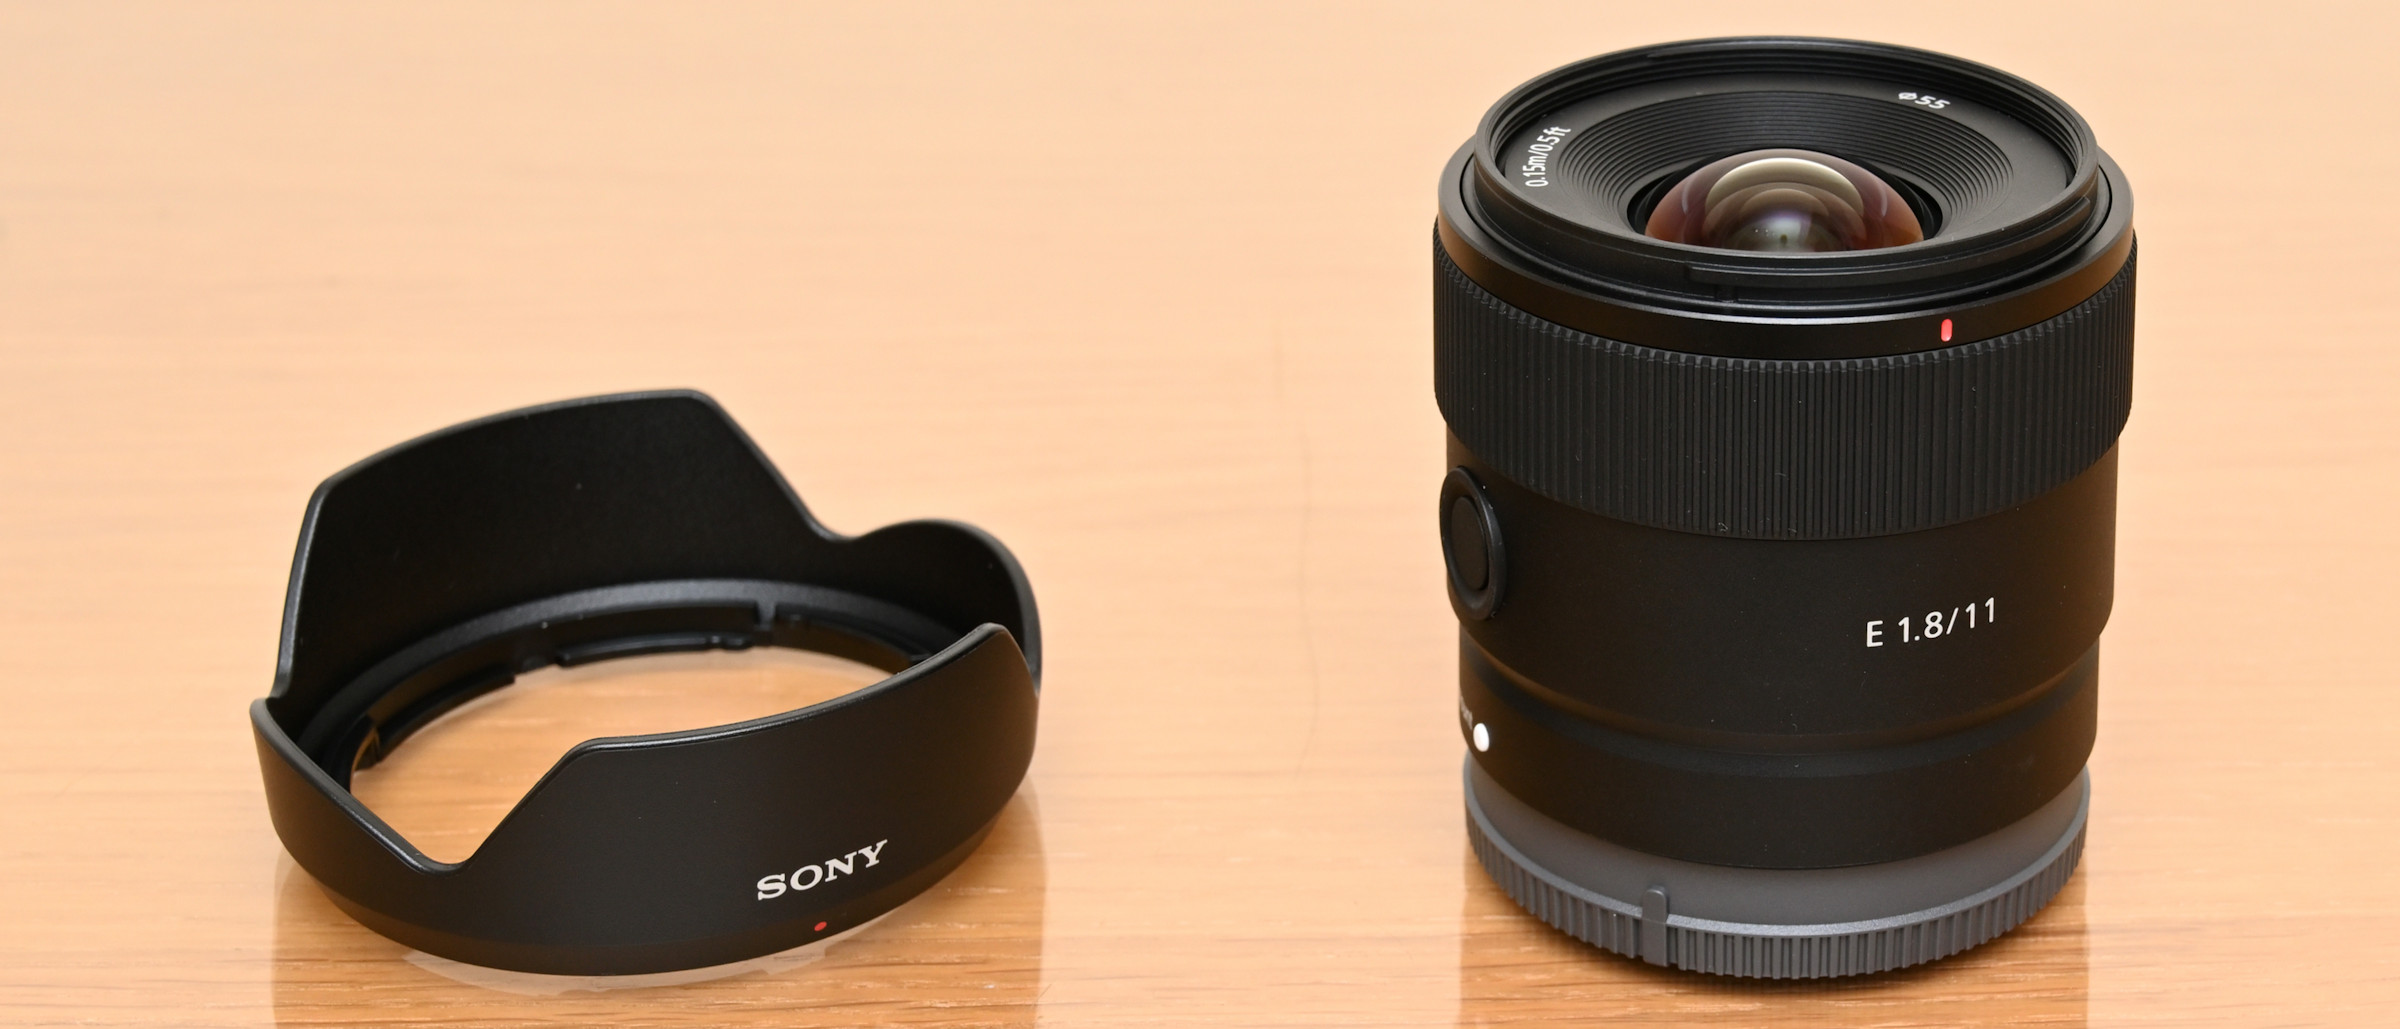 11mm Camera Sony World review Digital E F1.8 |